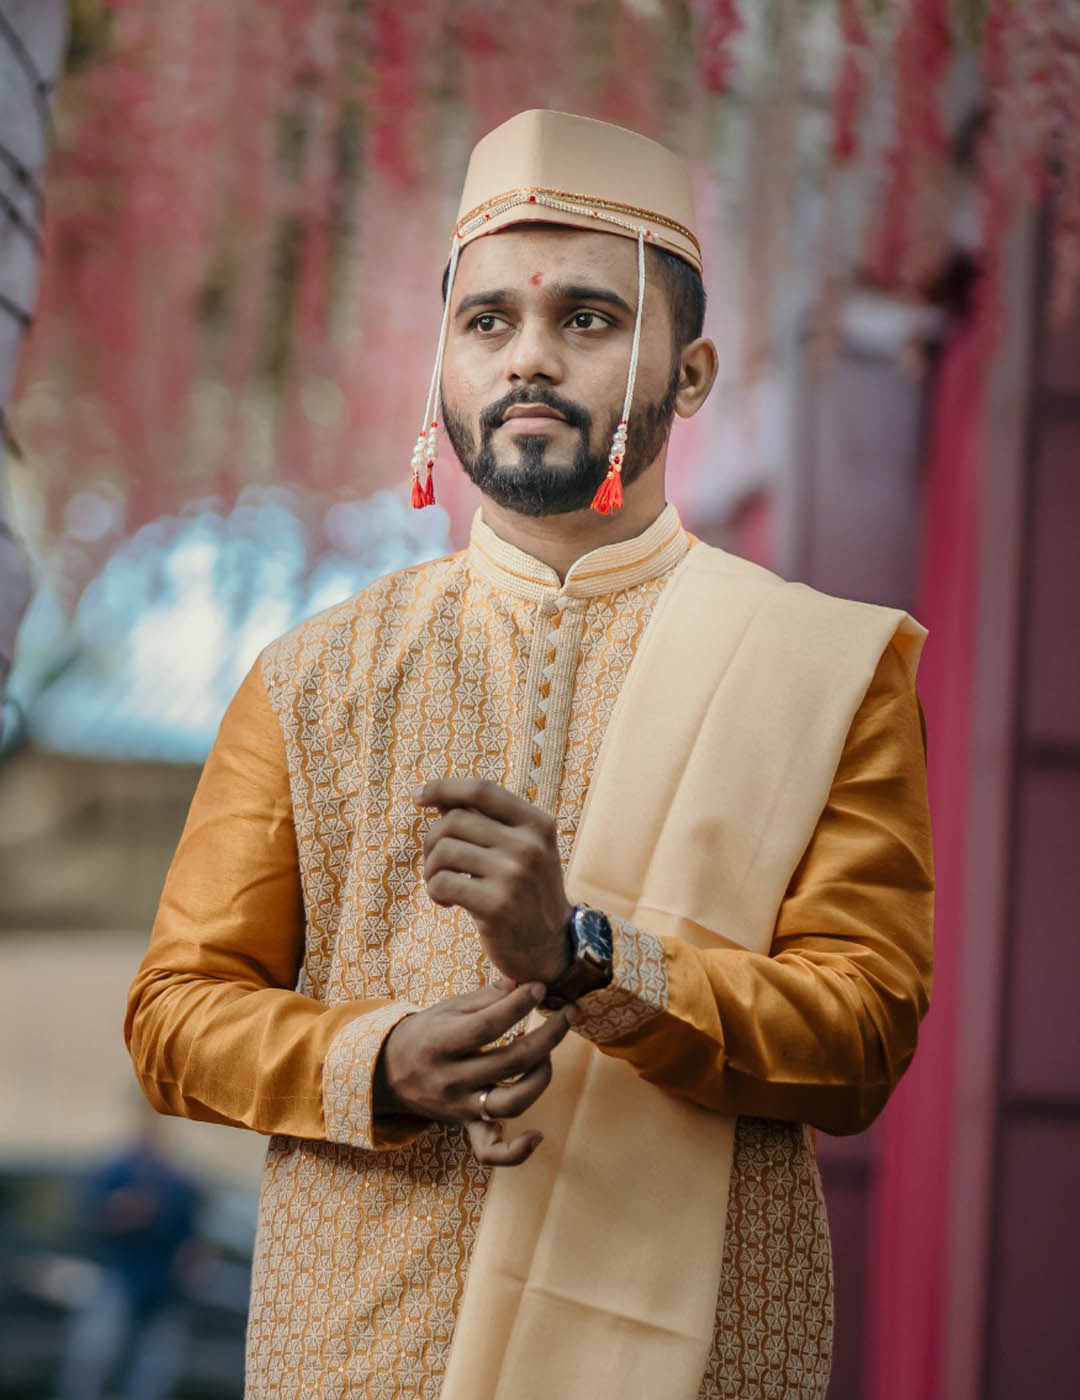 Manav Ethnic Happy Customer wearing Traditional Maharashtrian Wedding Outfit